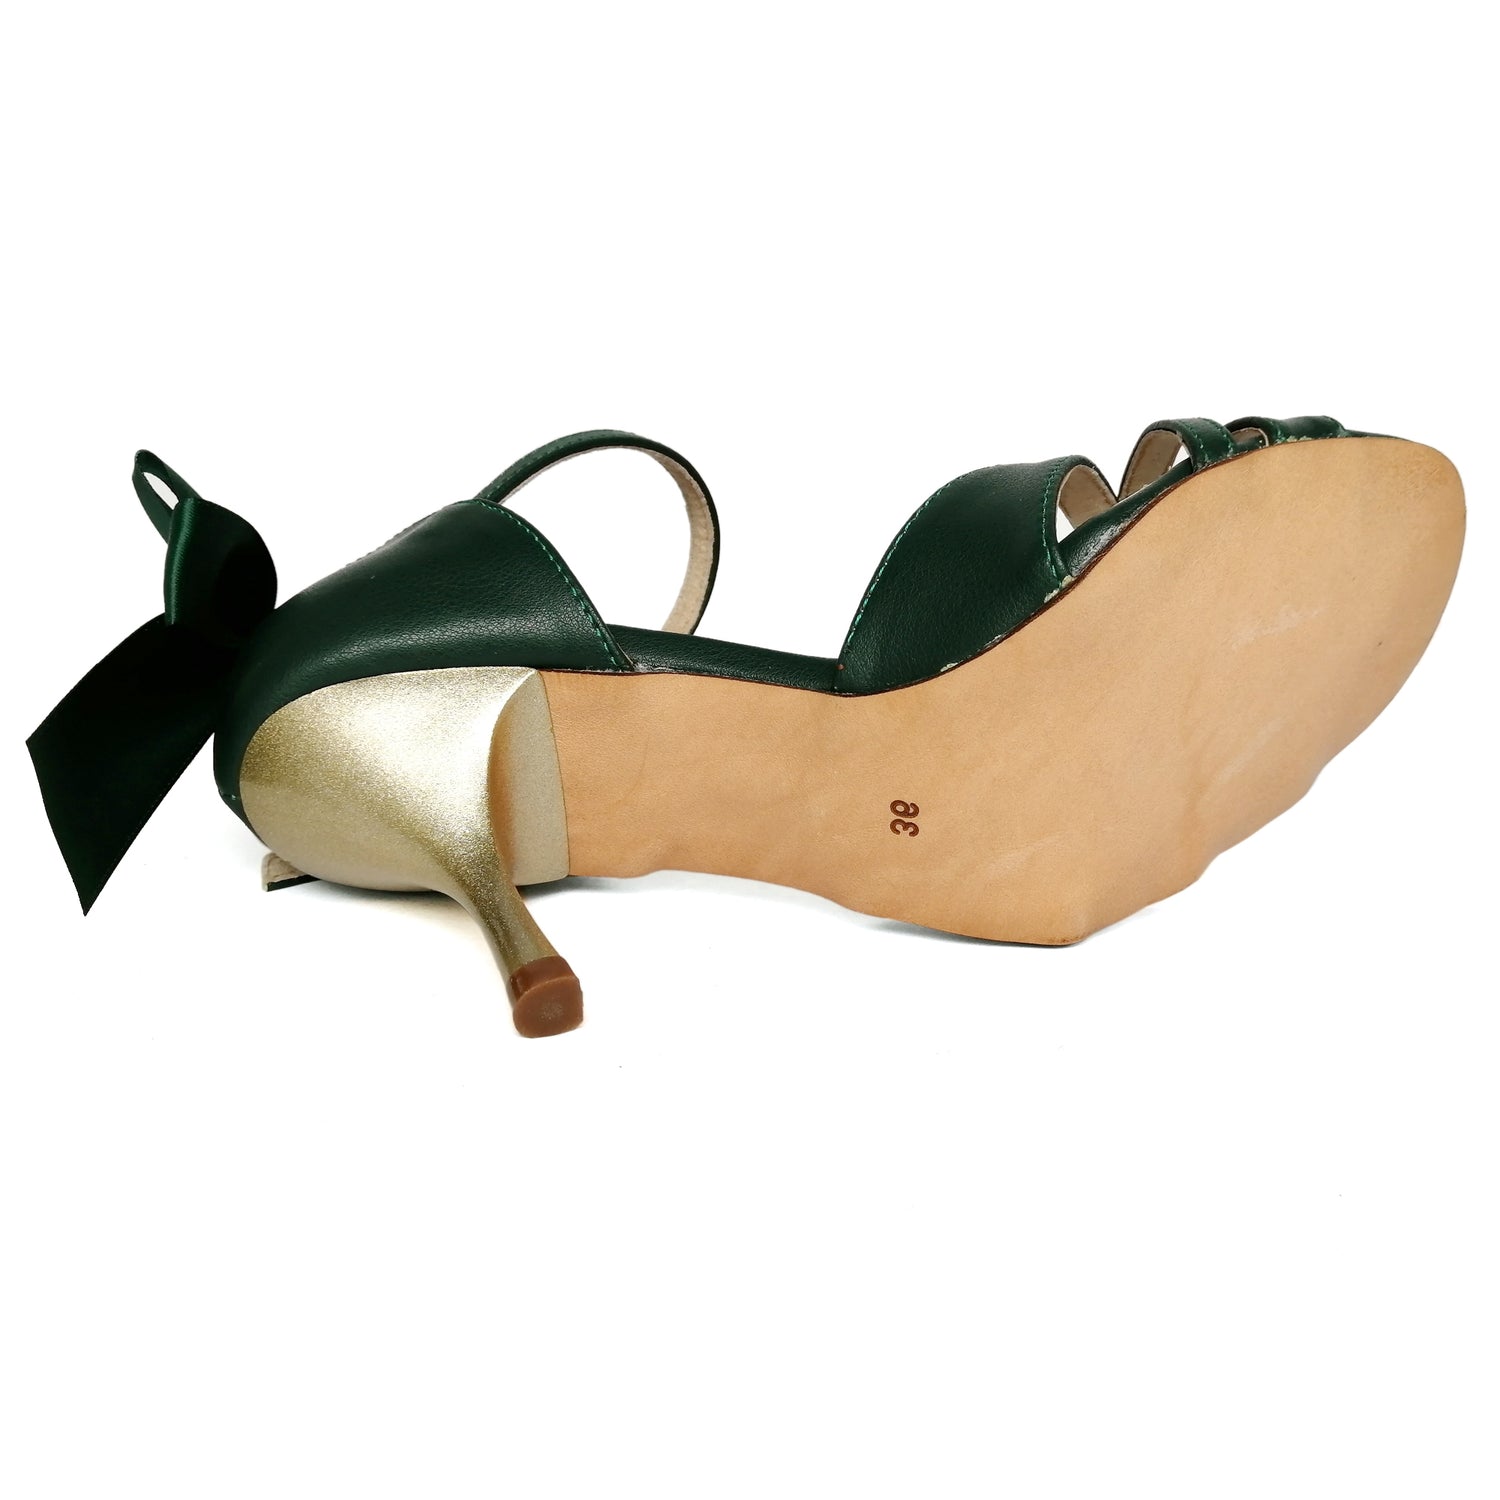 Pro Dancer Women's Argentine Tango Shoes High Heel Dance Sandals Leather Sole in Dark Green0